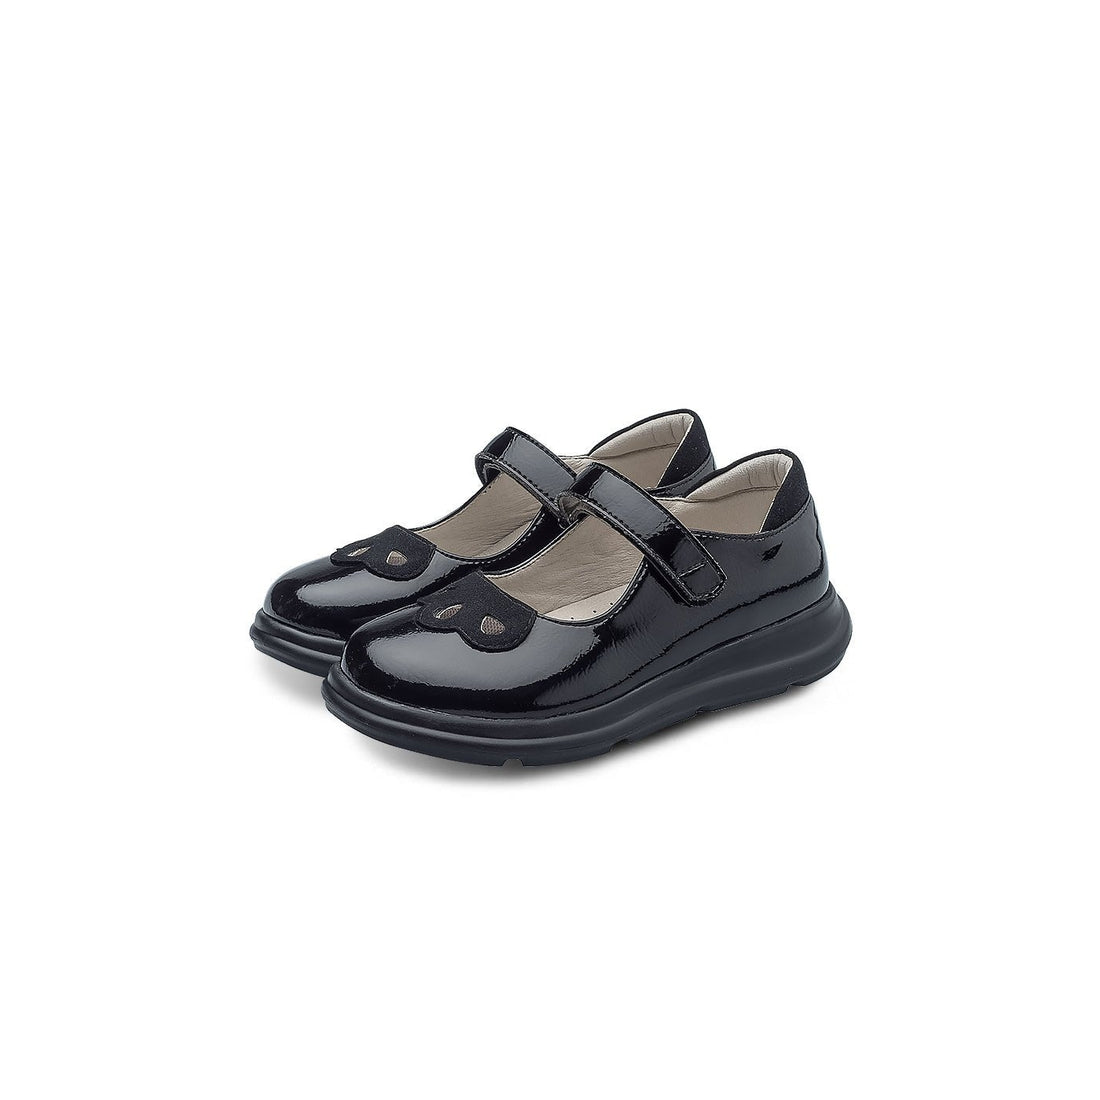 Ness Lightweight Soft Sole Girl Patent Black School Shoes - 0cm